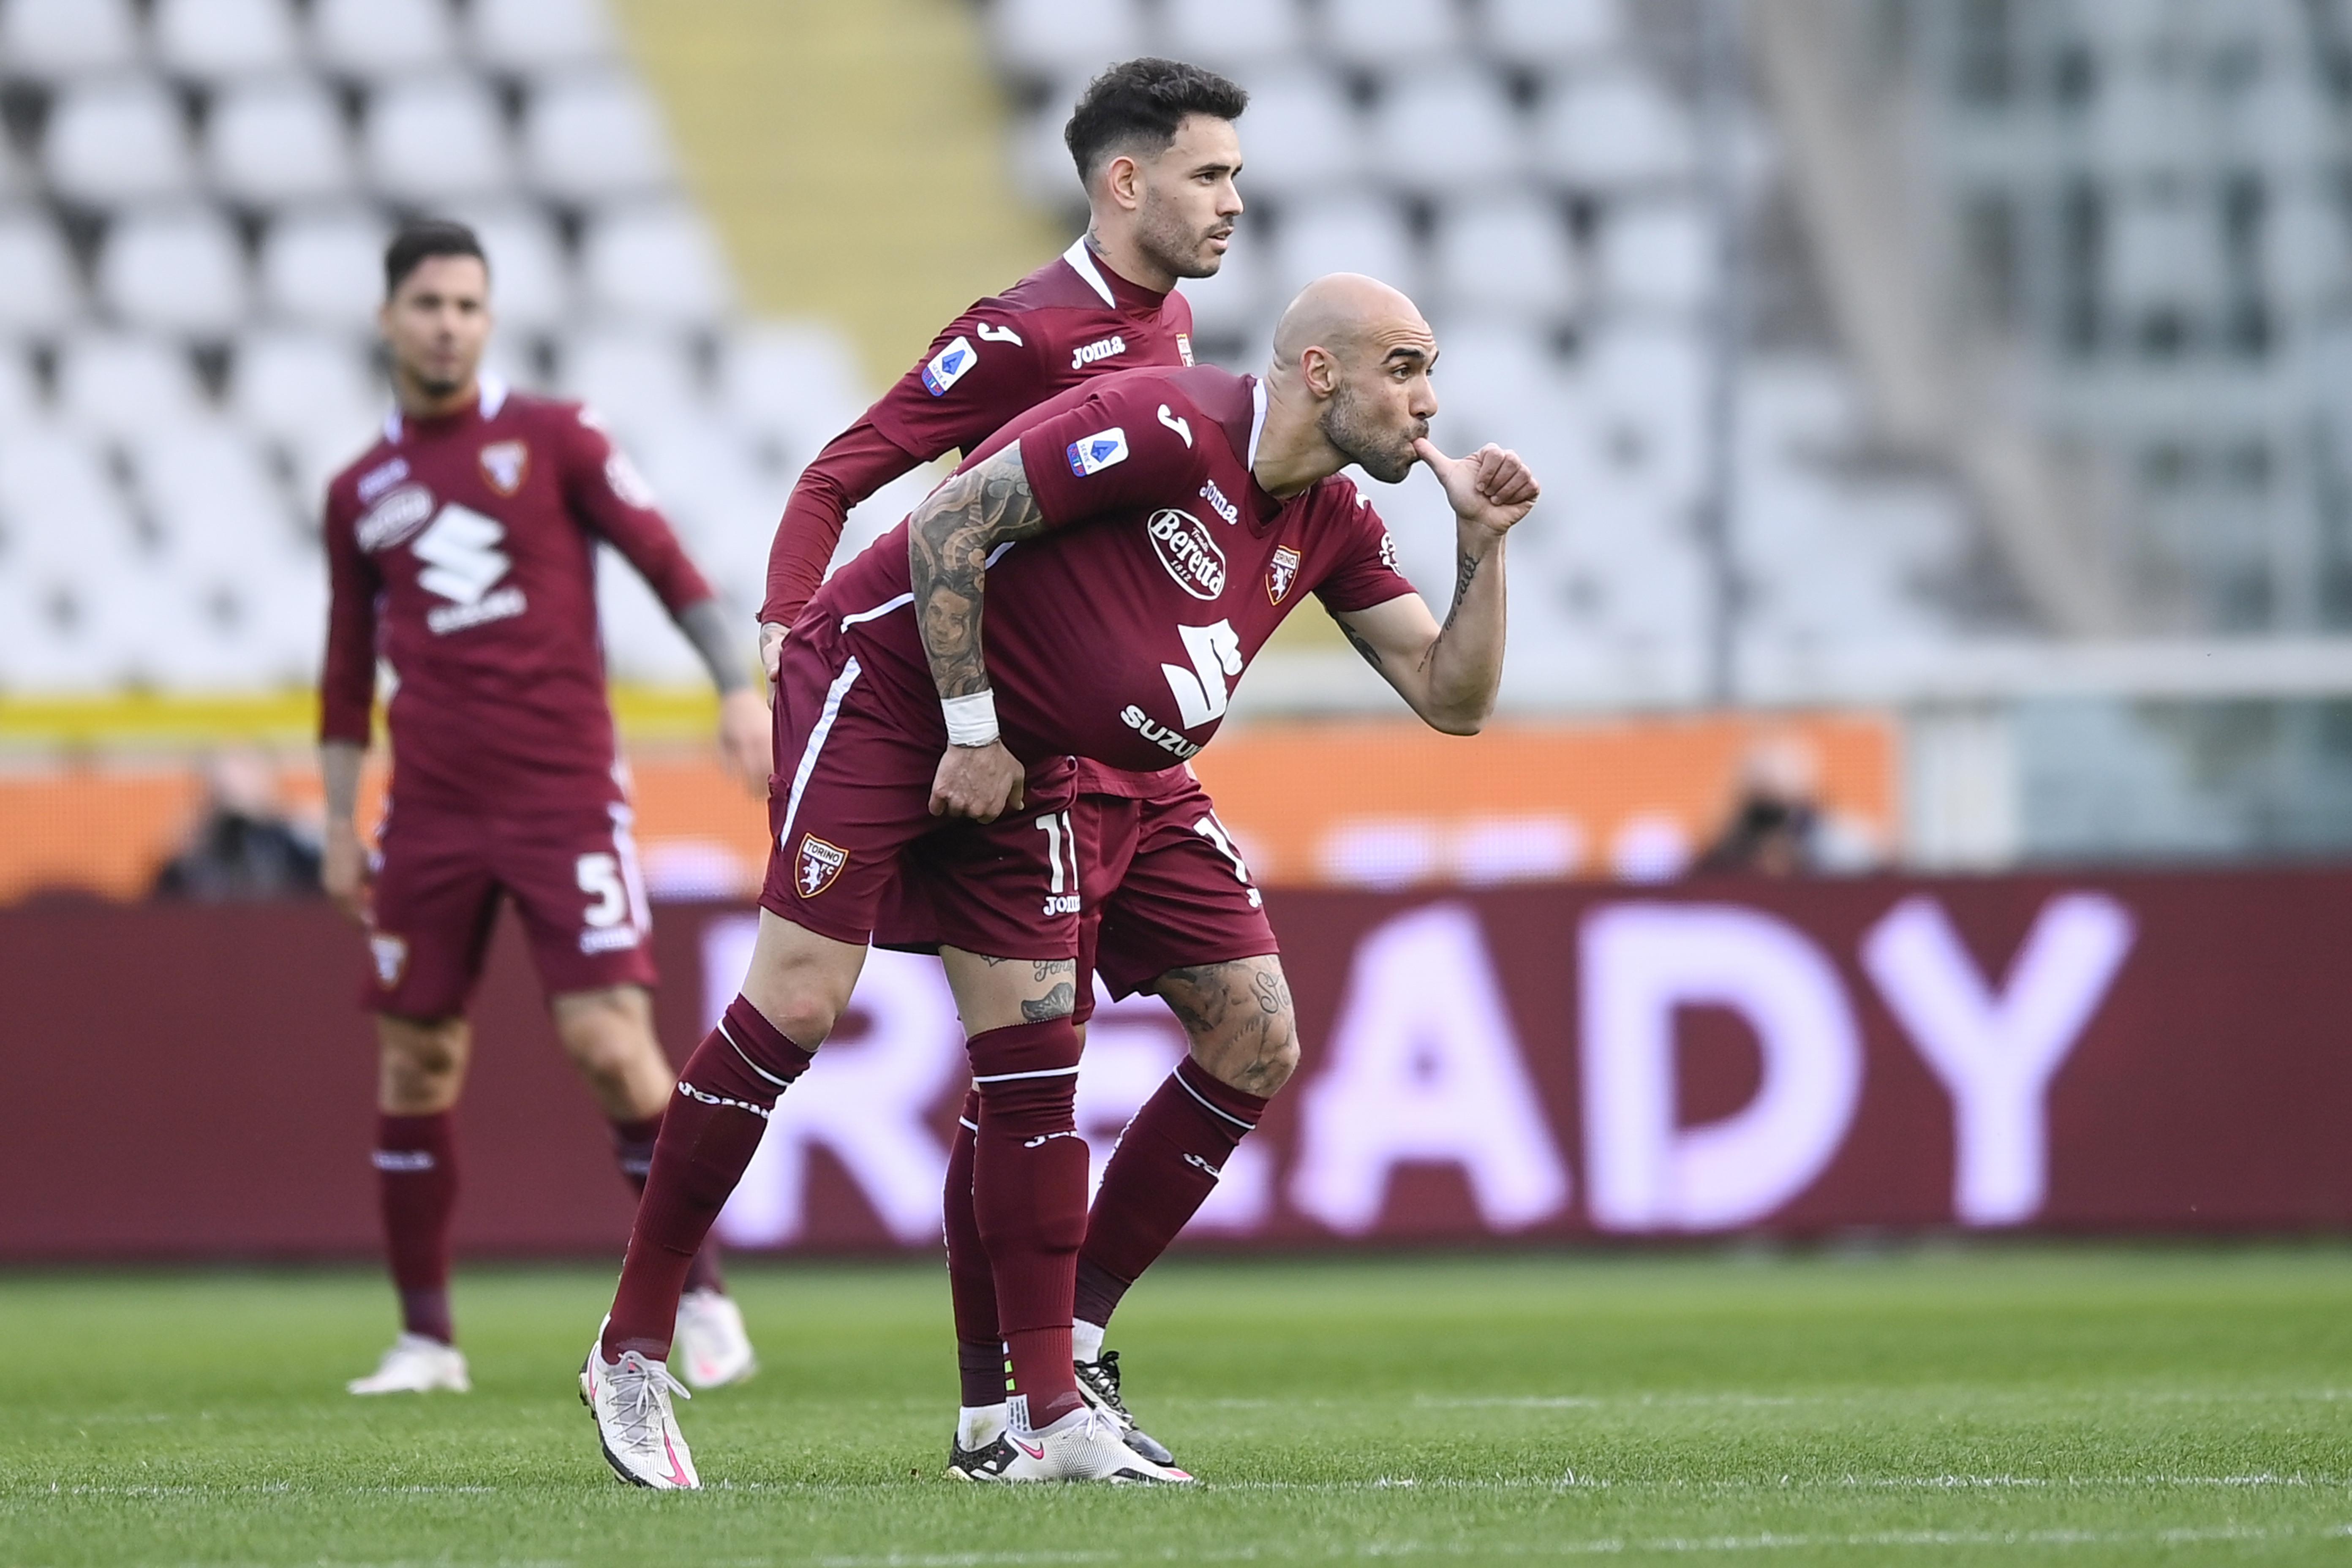 Torinolu Simone Zaza emzikli gol sevinciyle İtalyada gündem oldu